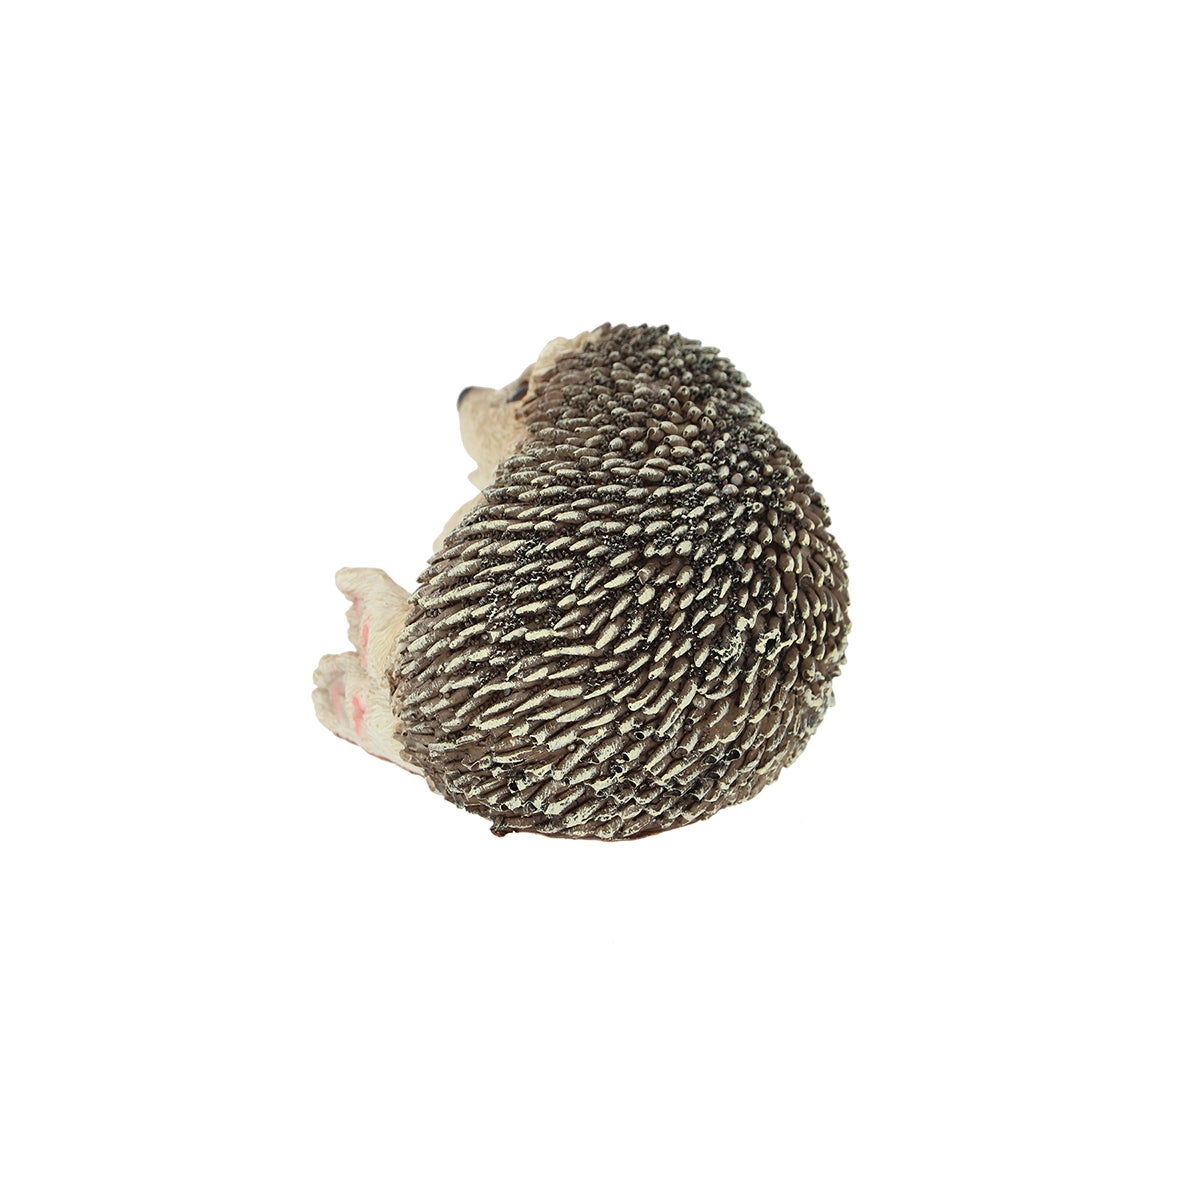 Hedgehog On Its Side